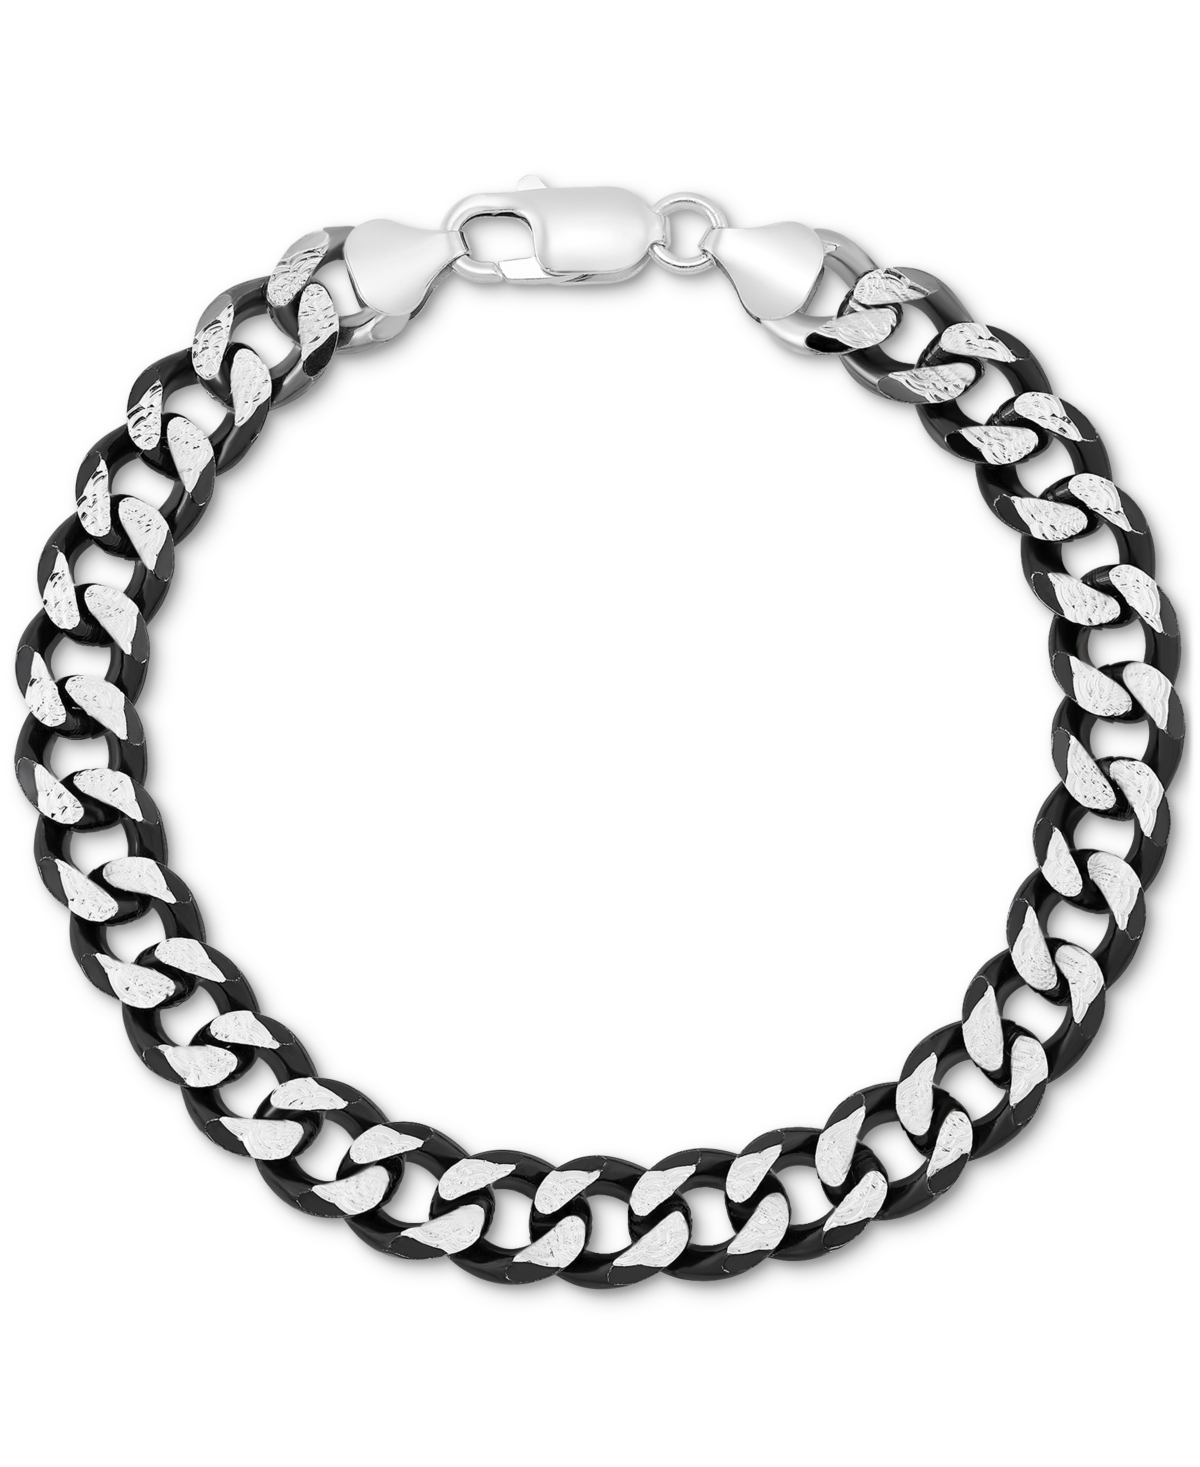 Men's Curb Link Chain Bracelet in Sterling Silver & Black Ruthenium-Plate - Silver